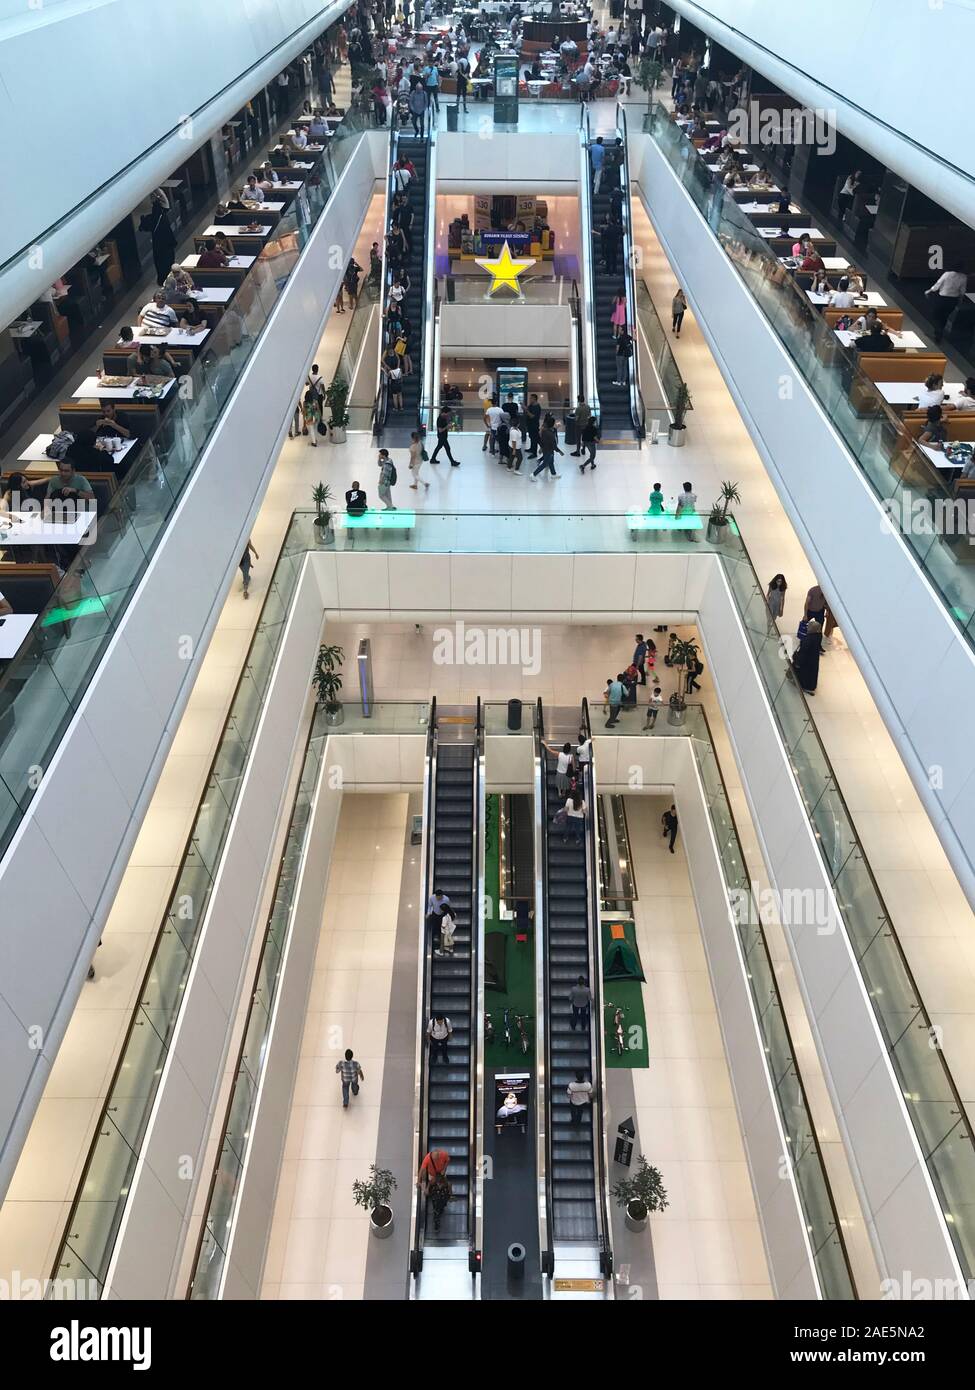 Ozdilek Shopping Mall escalators in Istanbul, Turkey Stock Photo - Alamy